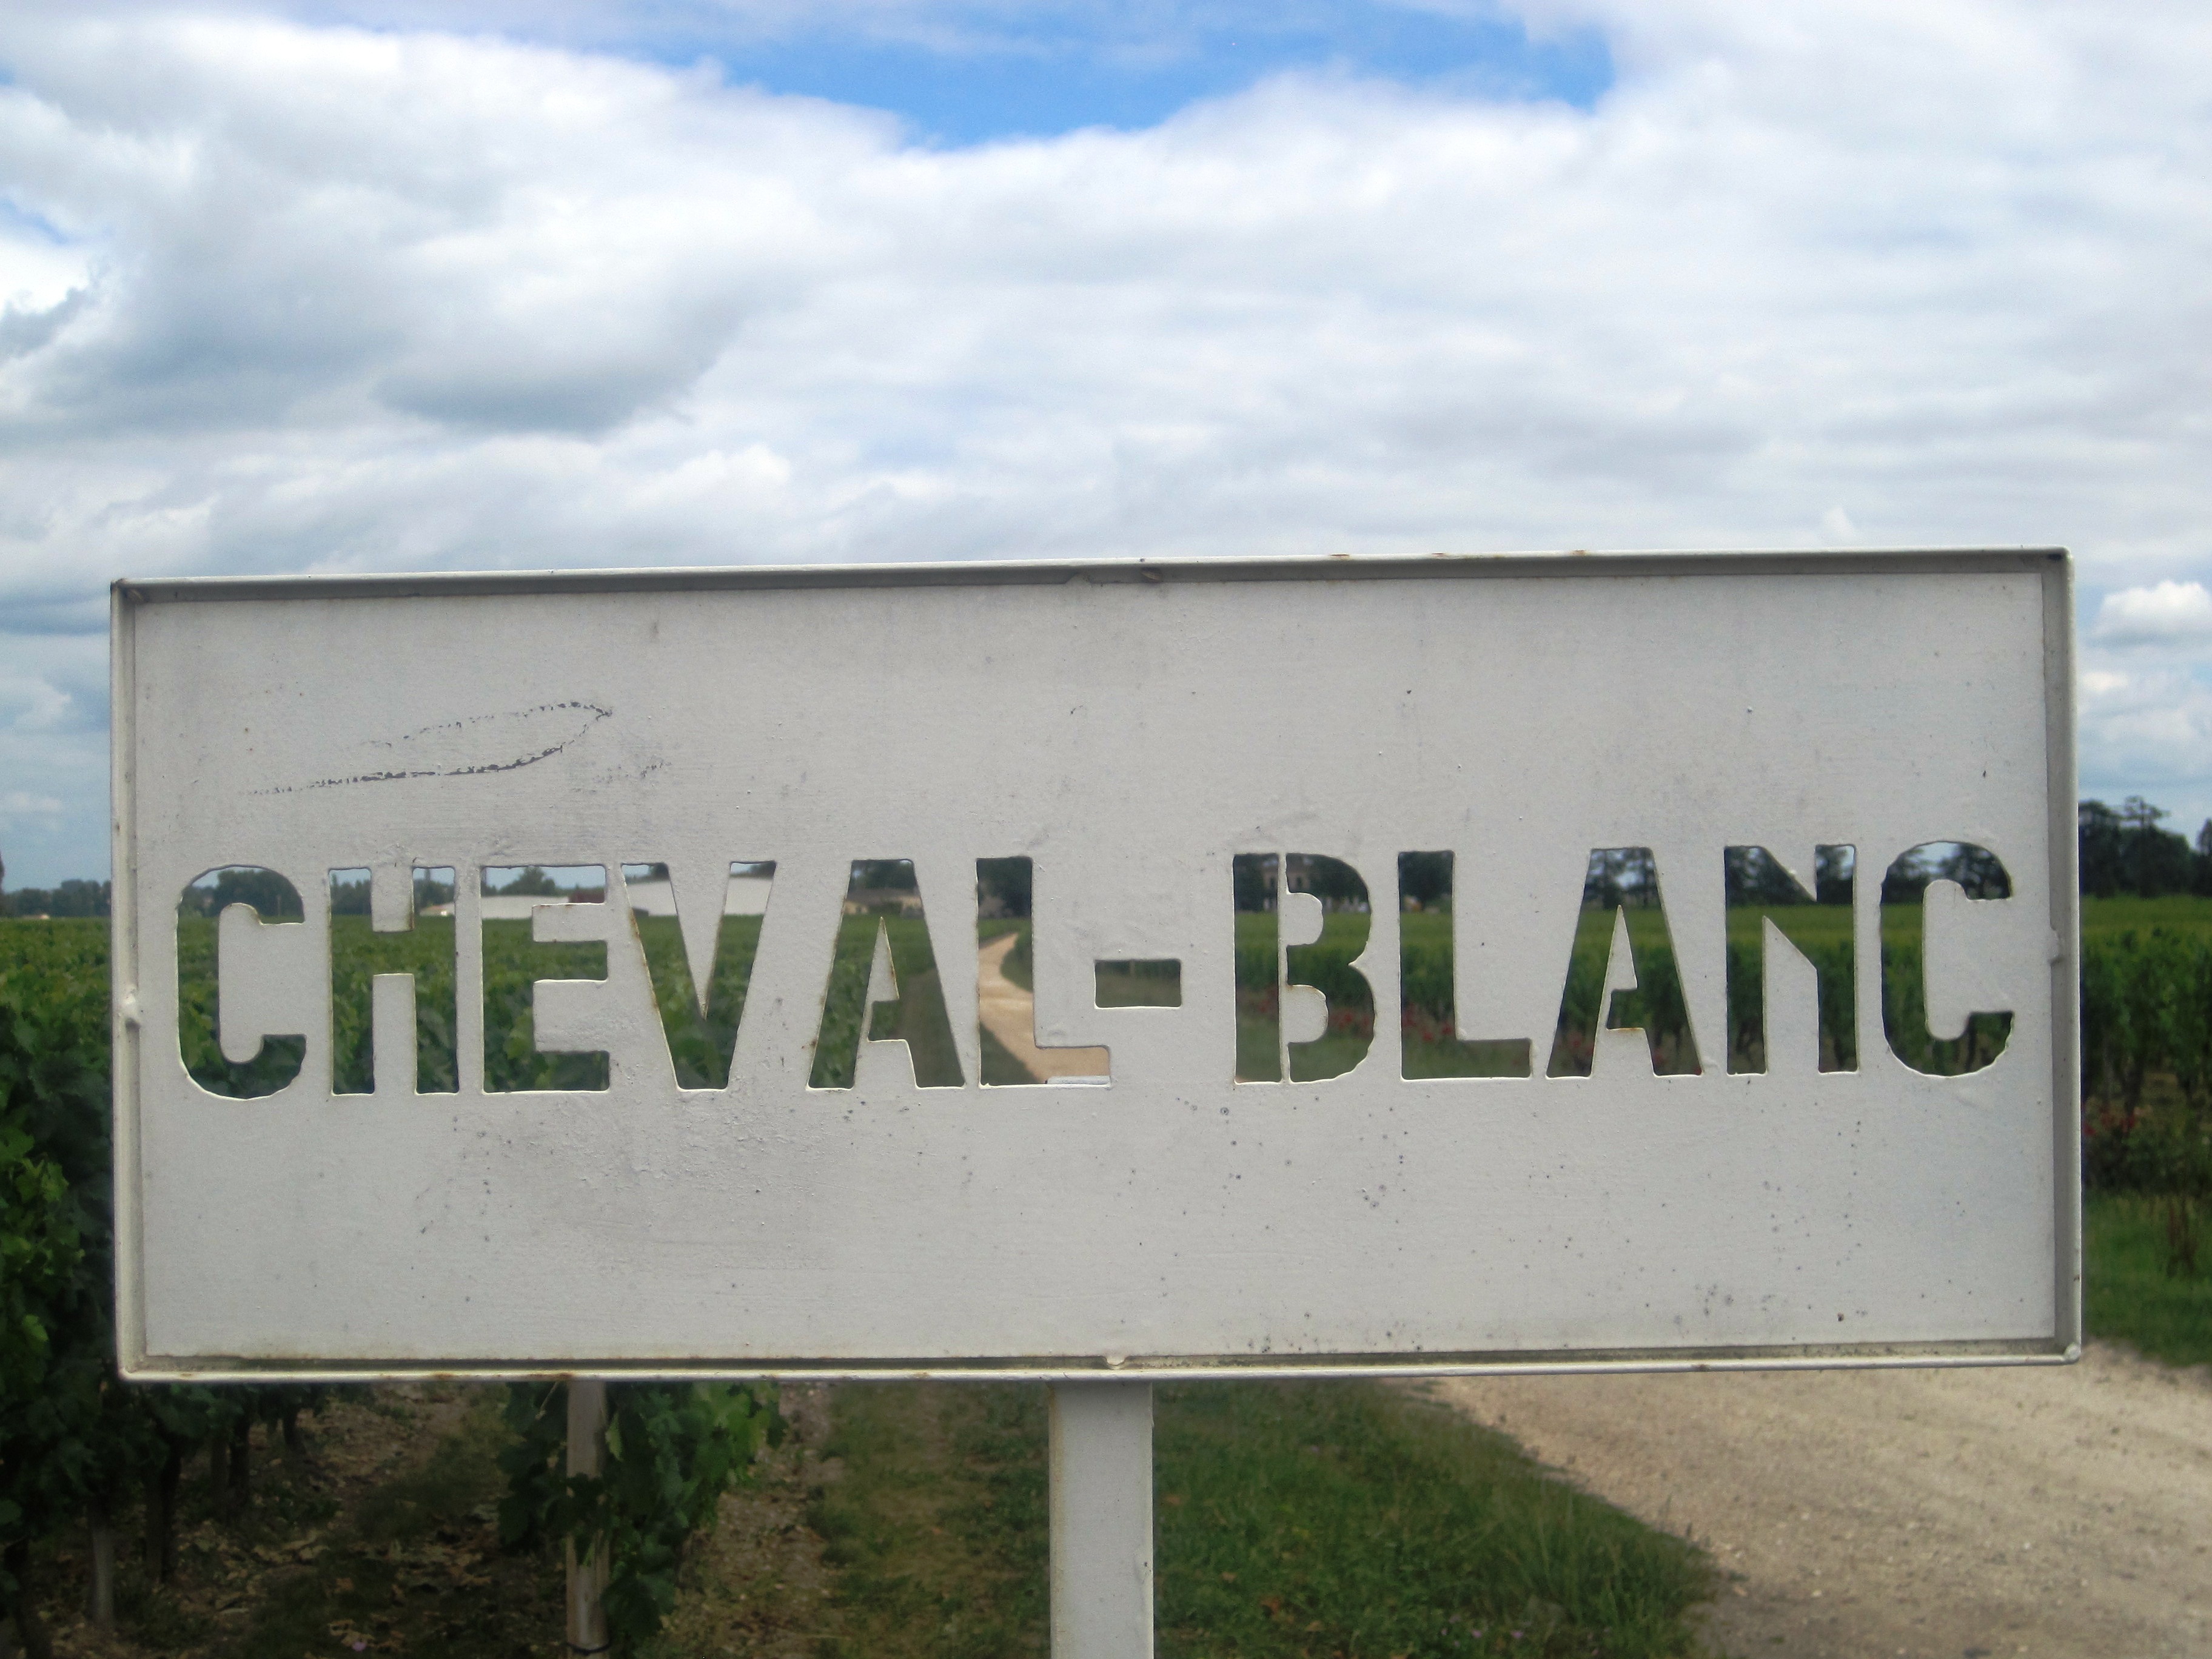 Chateau Cheval Blanc - St.-Emilion Grand Cru 2009 - Arlington Wine & Liquor